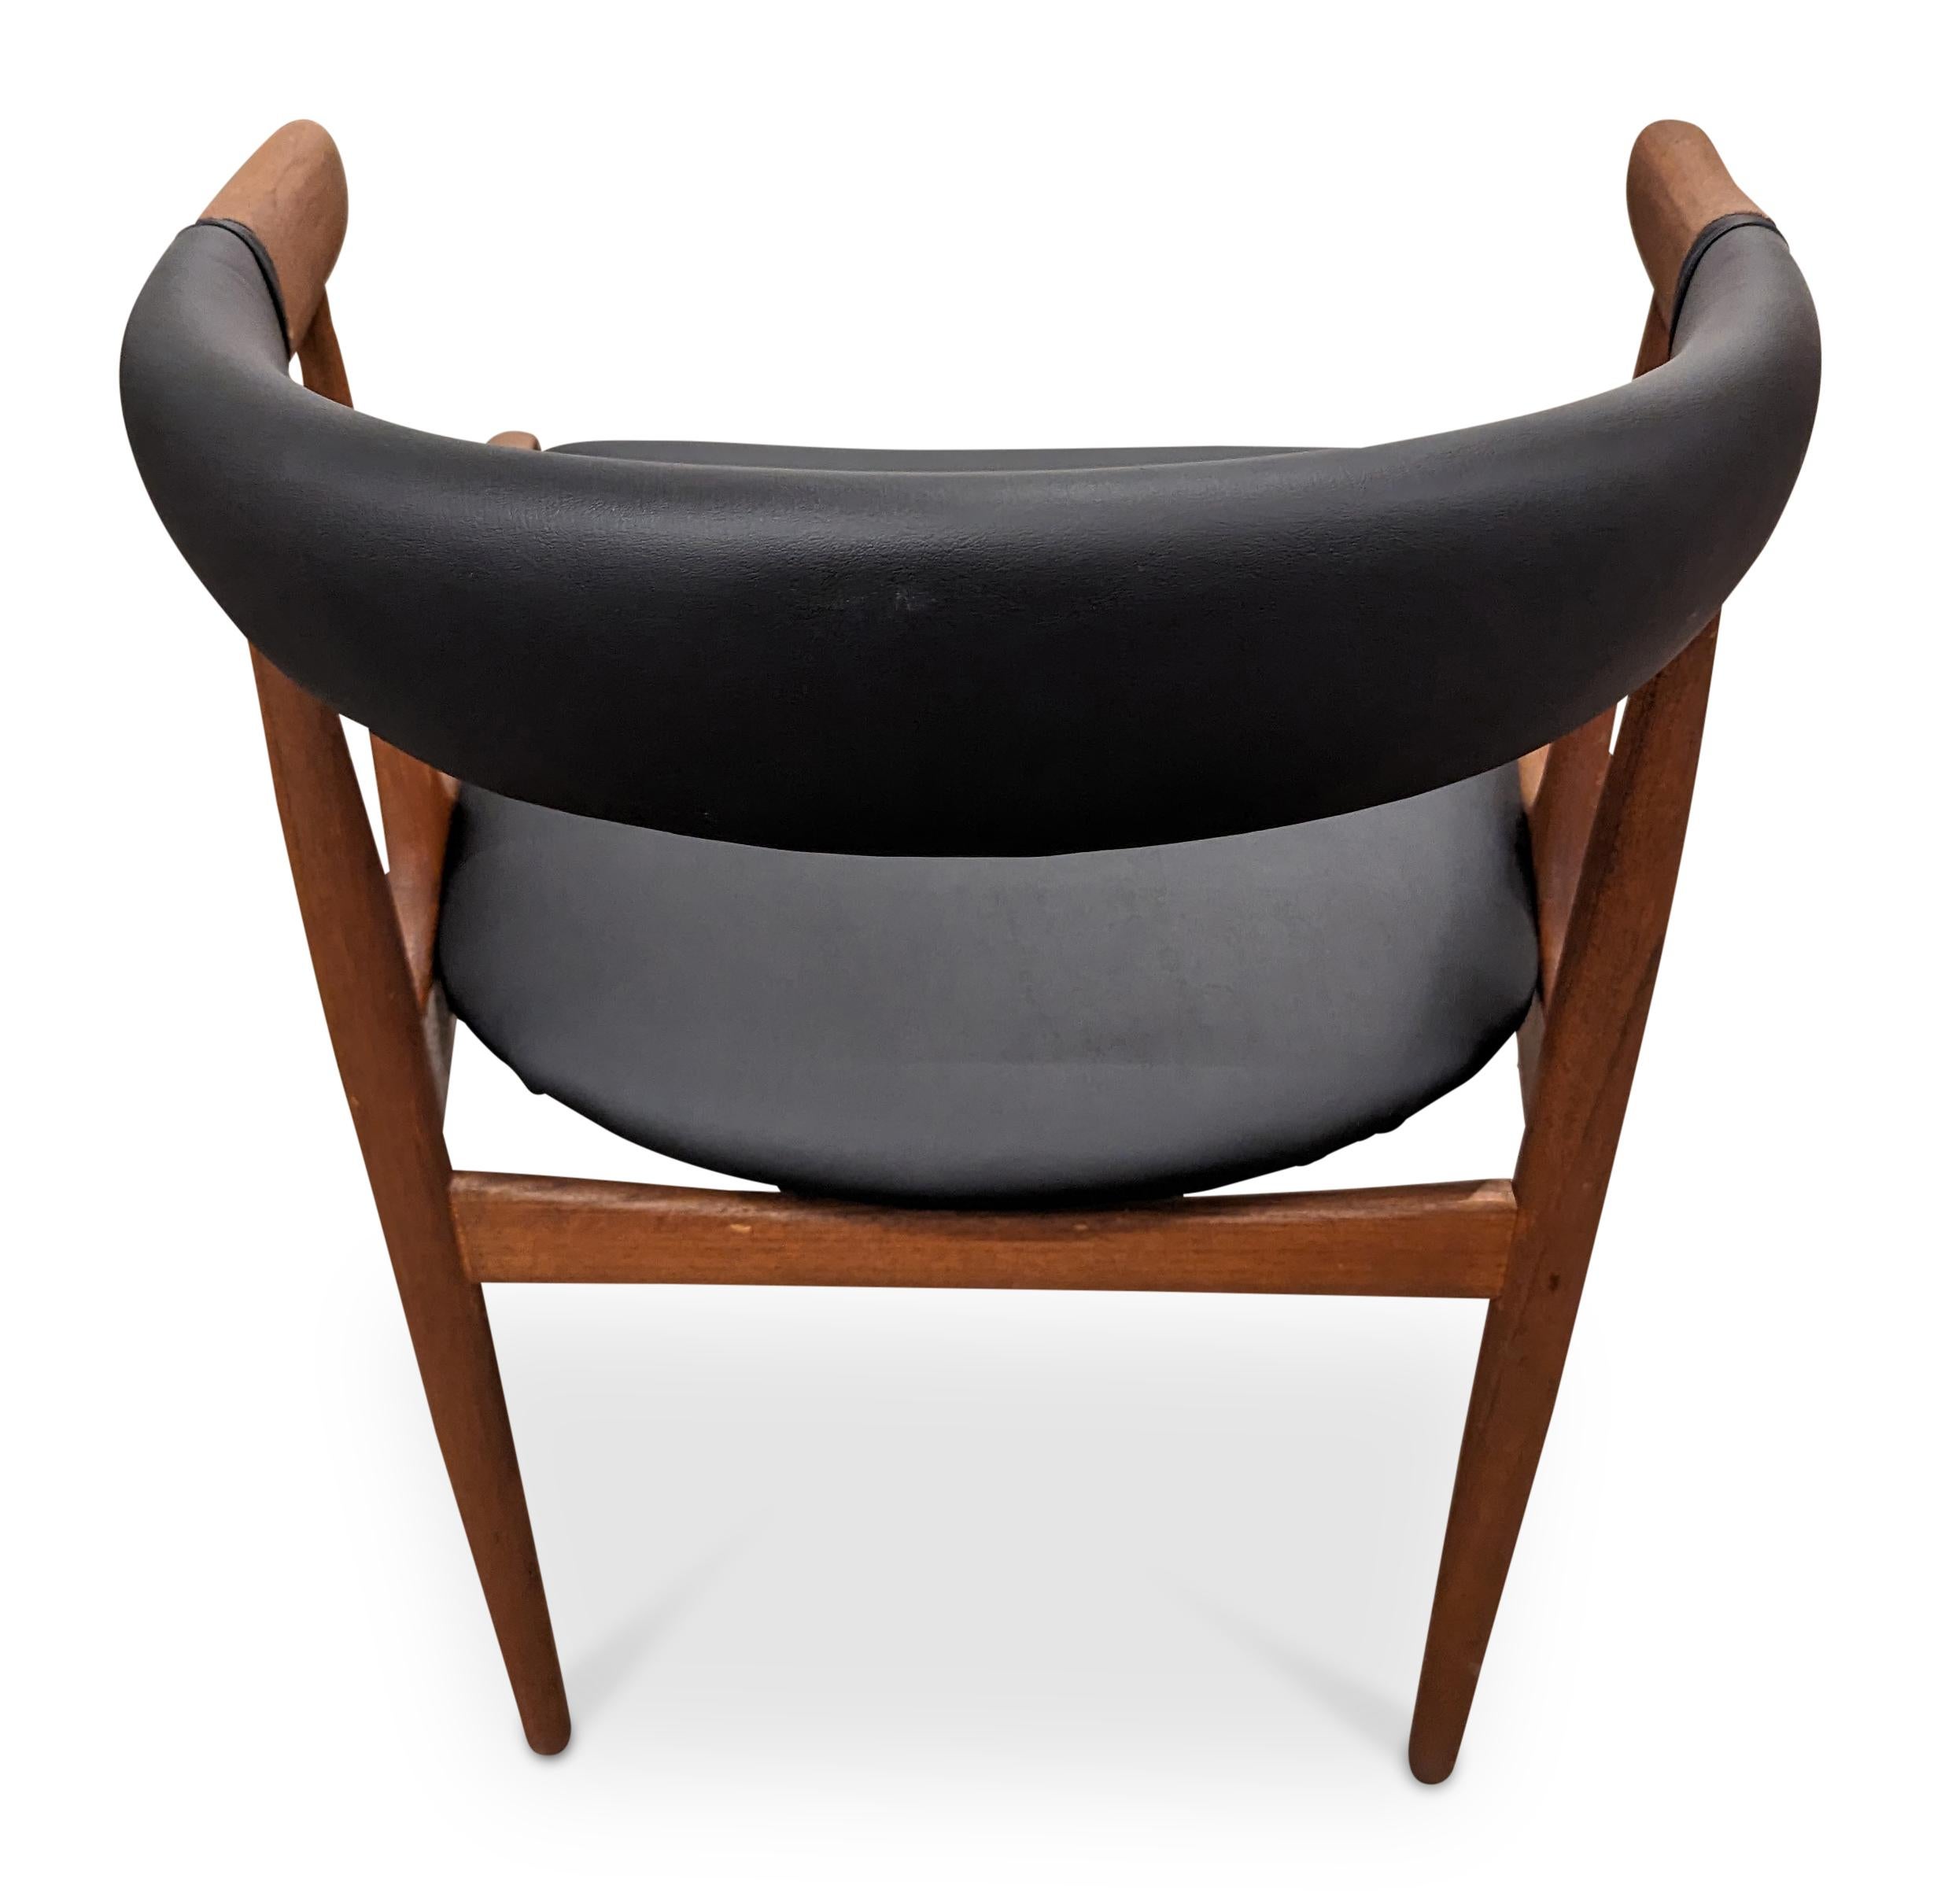 Teak Vintage Danish Mid Century Johannes Andersen Arm Chair - 022432 For Sale